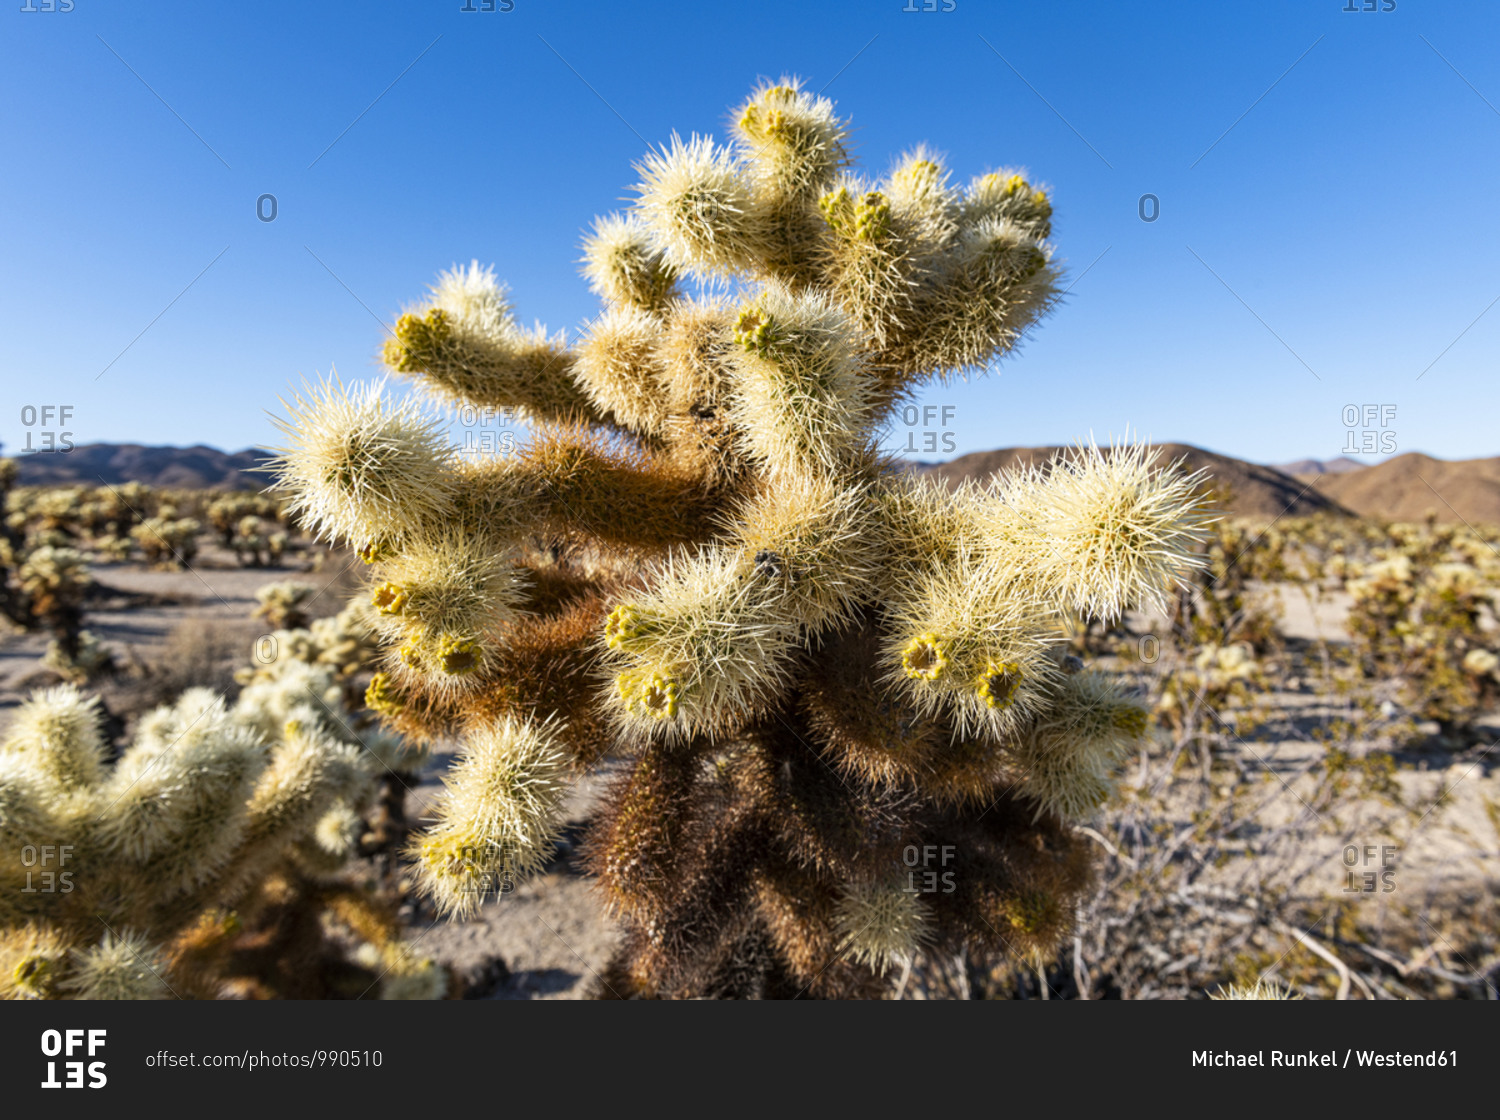 USA- California- Cholla cacti in Joshua Tree National Park